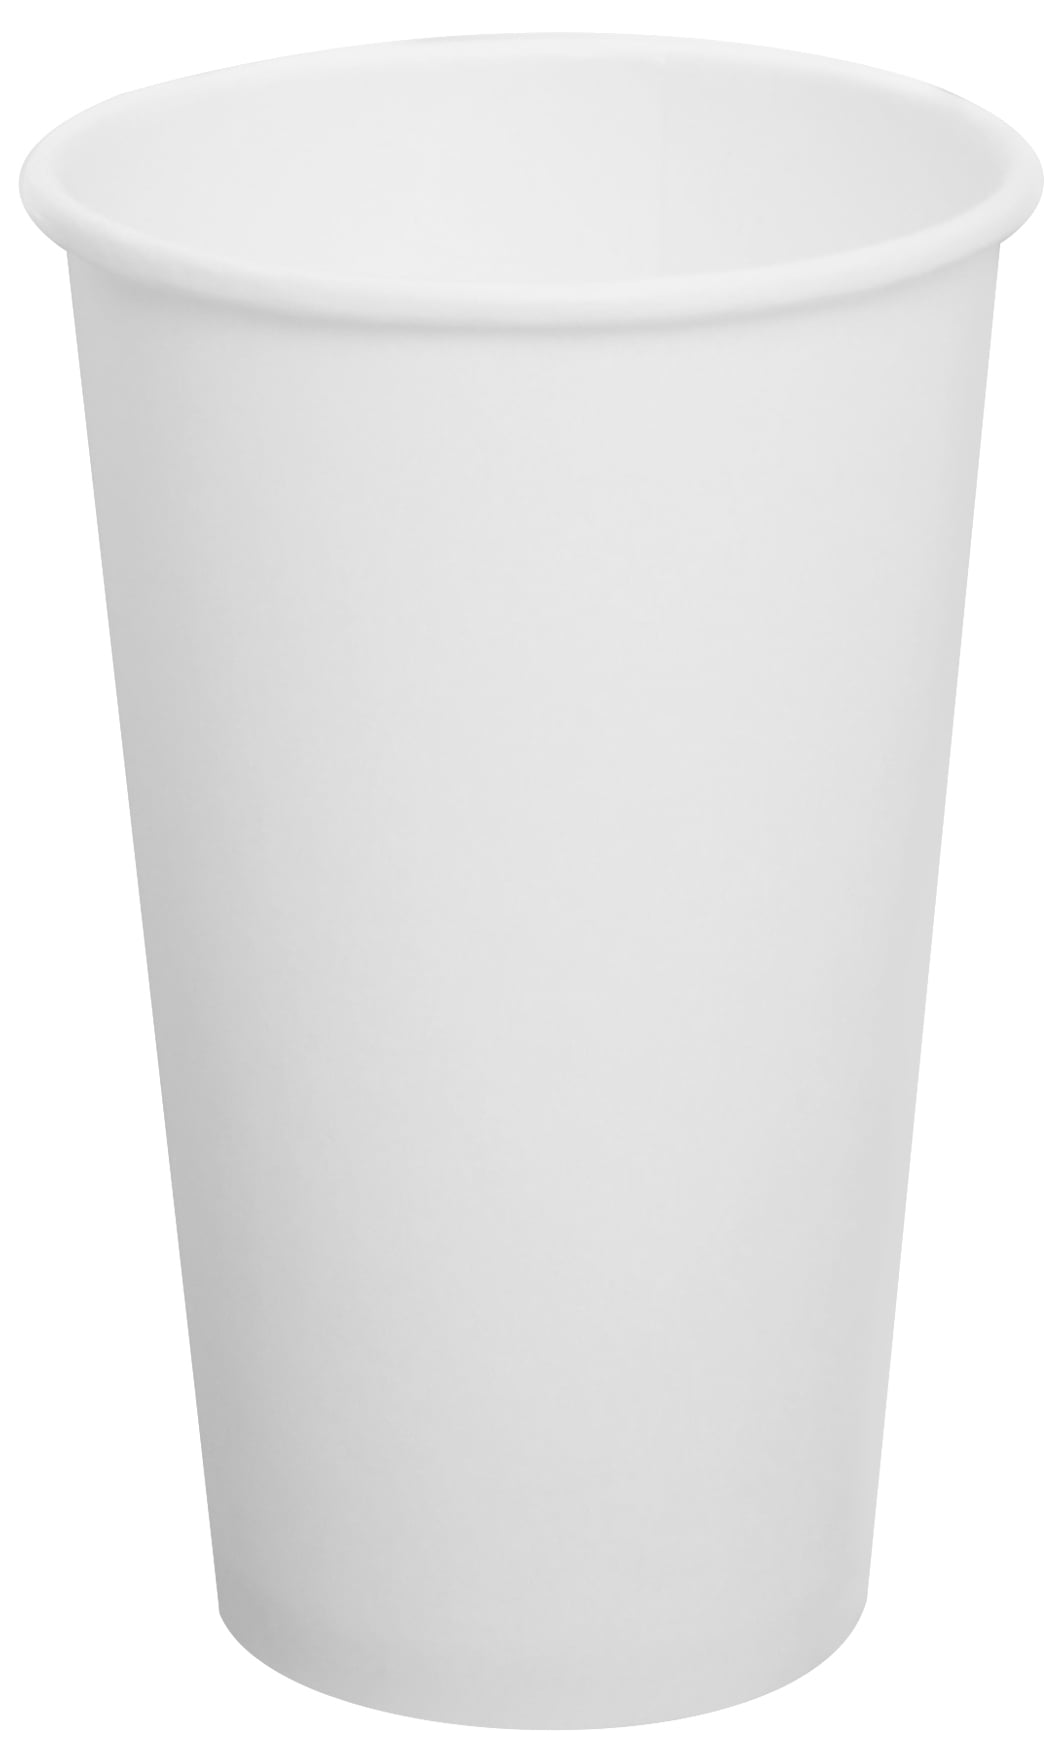 Genuine Joe® Styrofoam Cup, Hot/Cold, 24 fl oz, White, 300 Cups (GJO25251)  